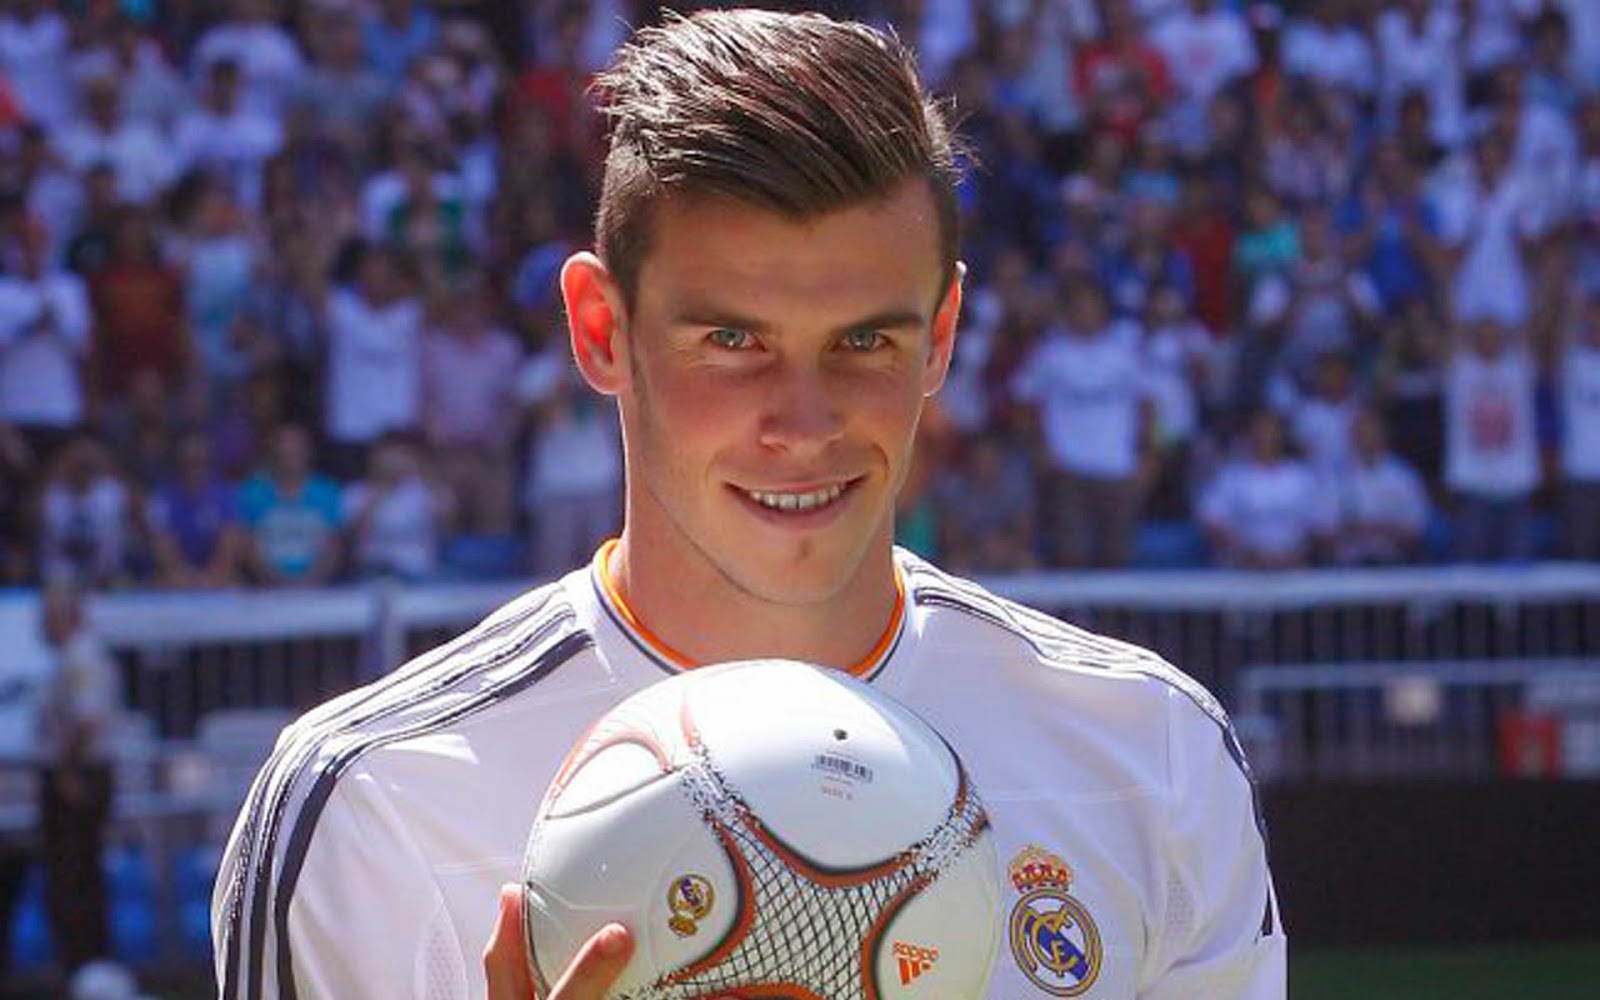 Hairstyles 2014: Gareth Bale